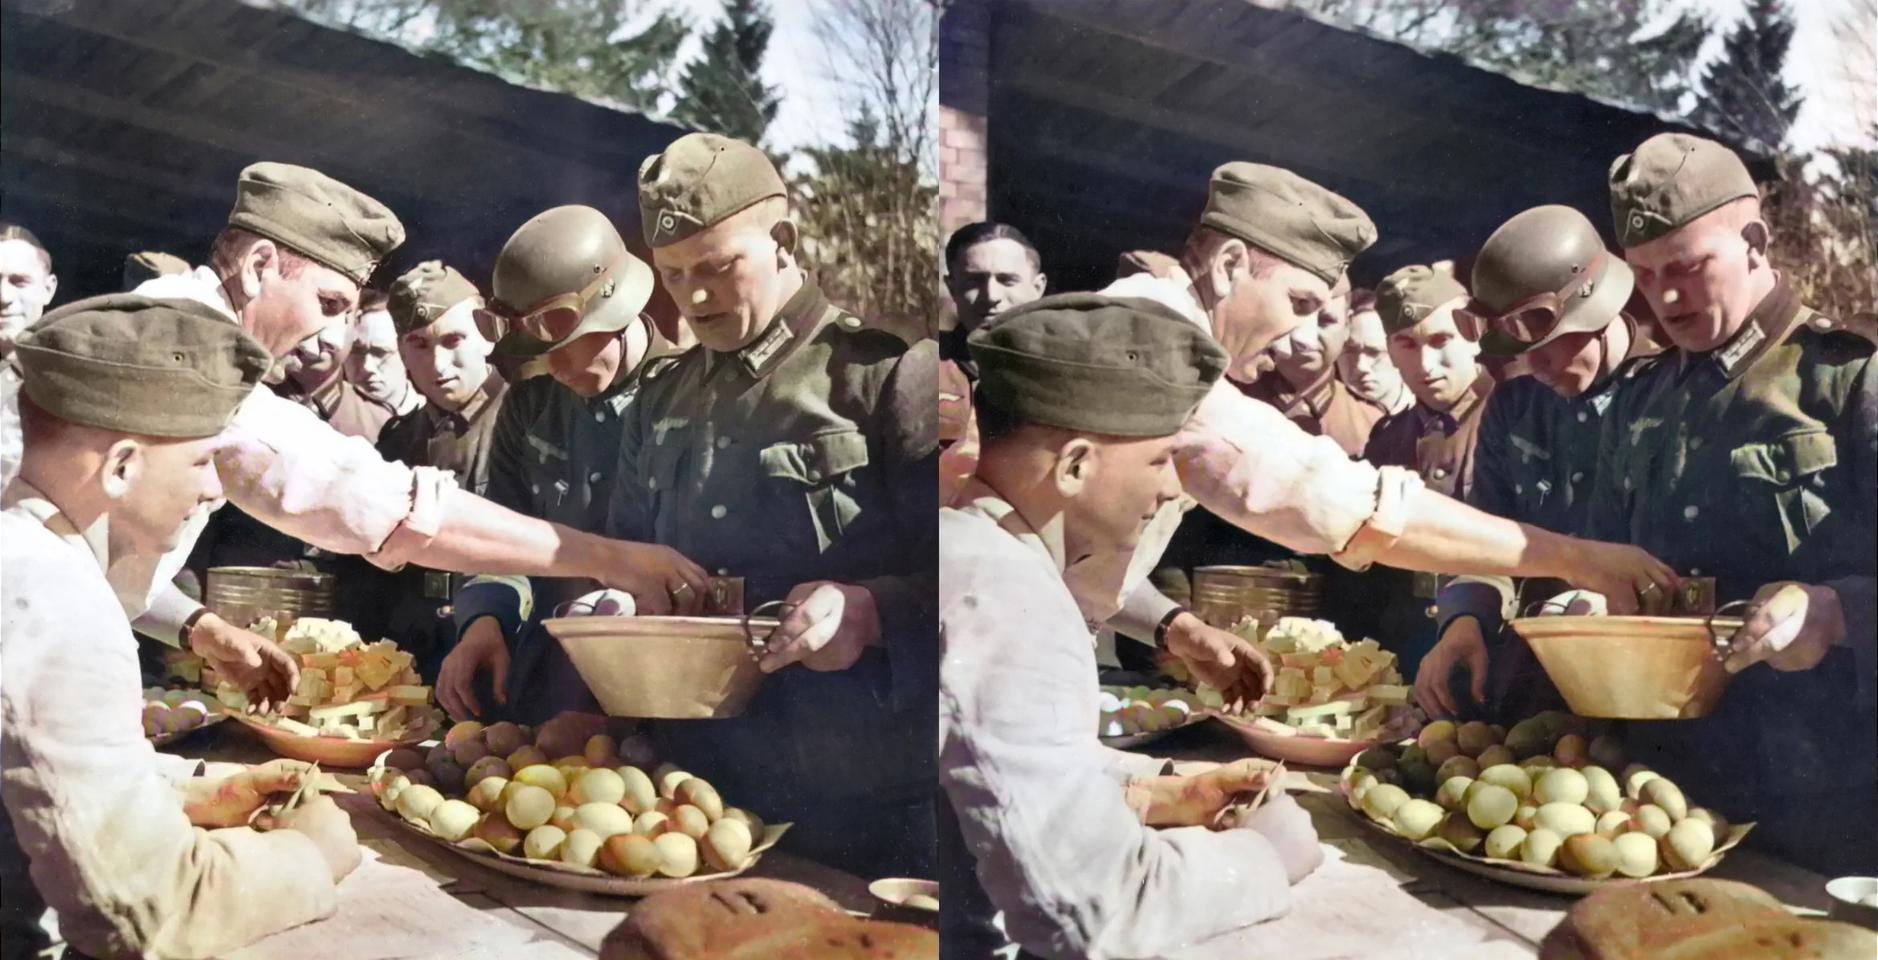 065 - German troups being served eggs